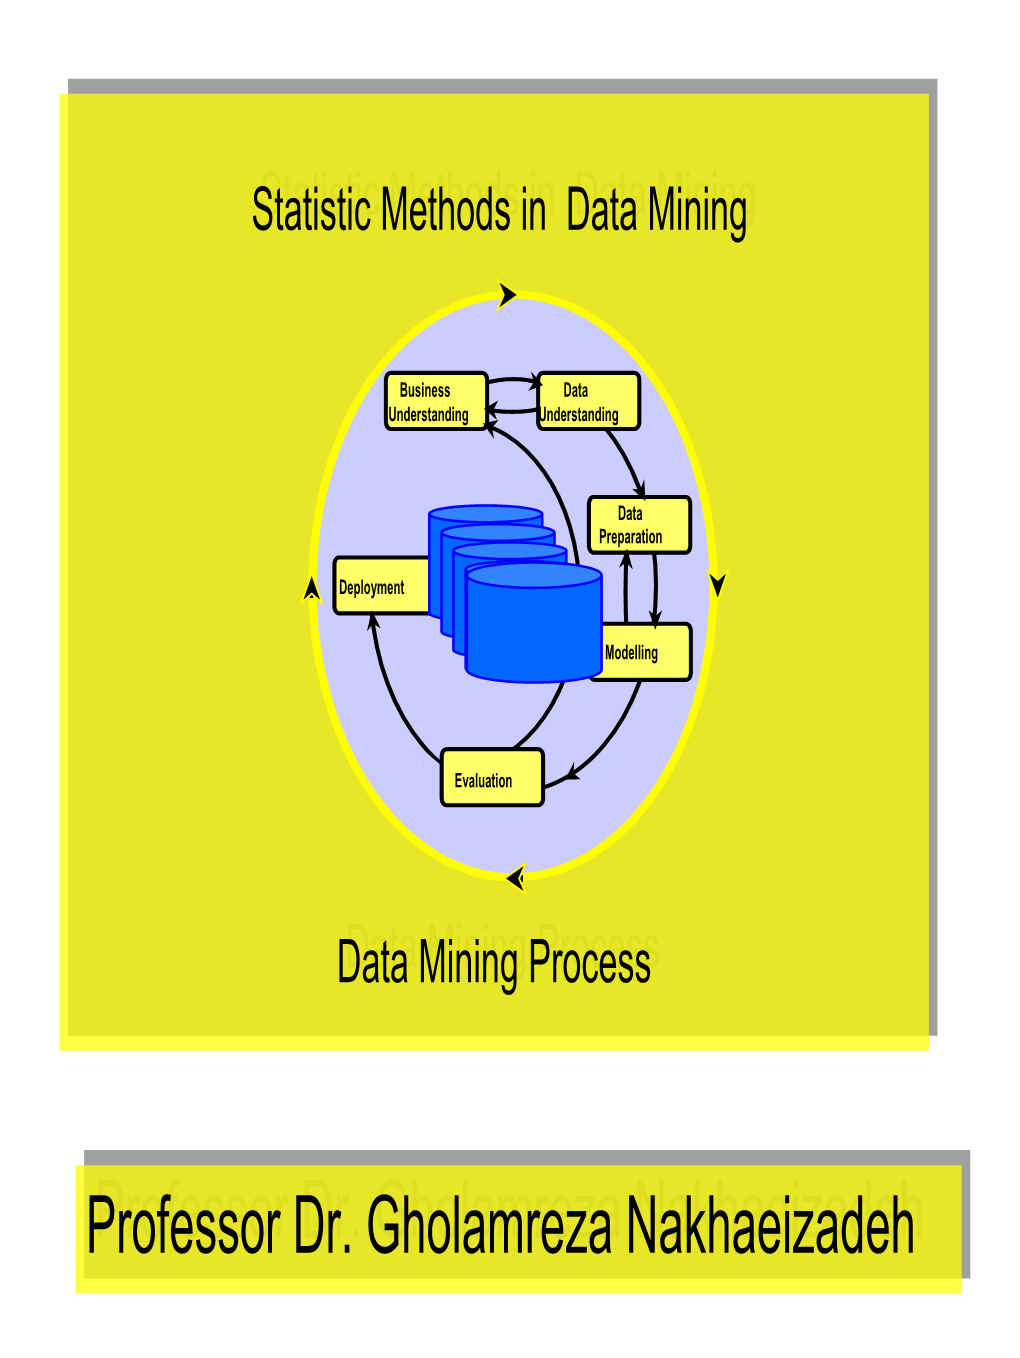 Data Understanding CRISP-DM: Data Understanding Data